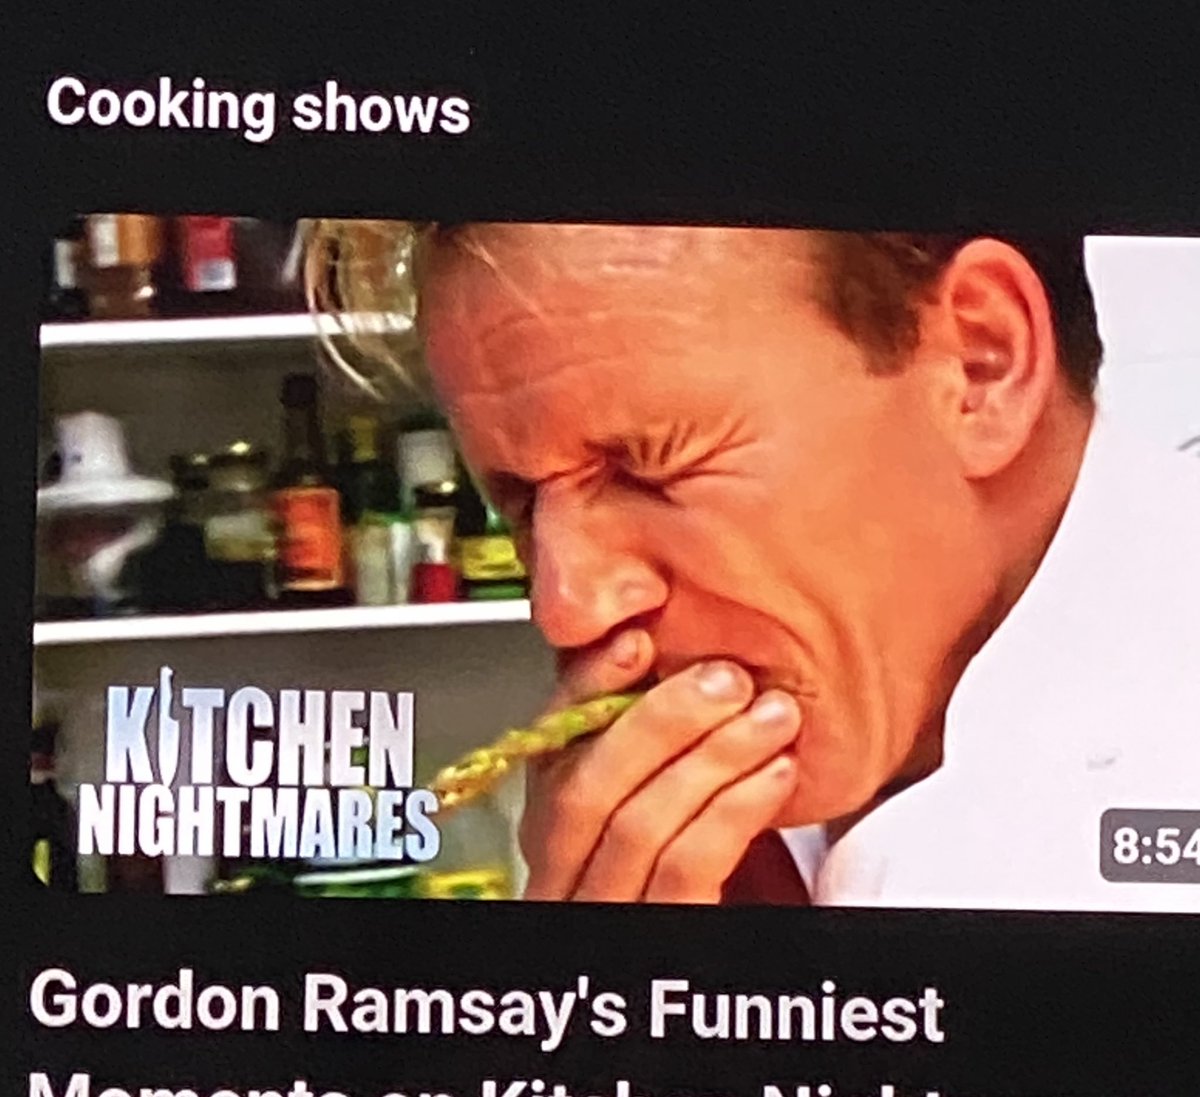 Gordon ramsay smoke asparagus https://t.co/Qur1kNpDLu